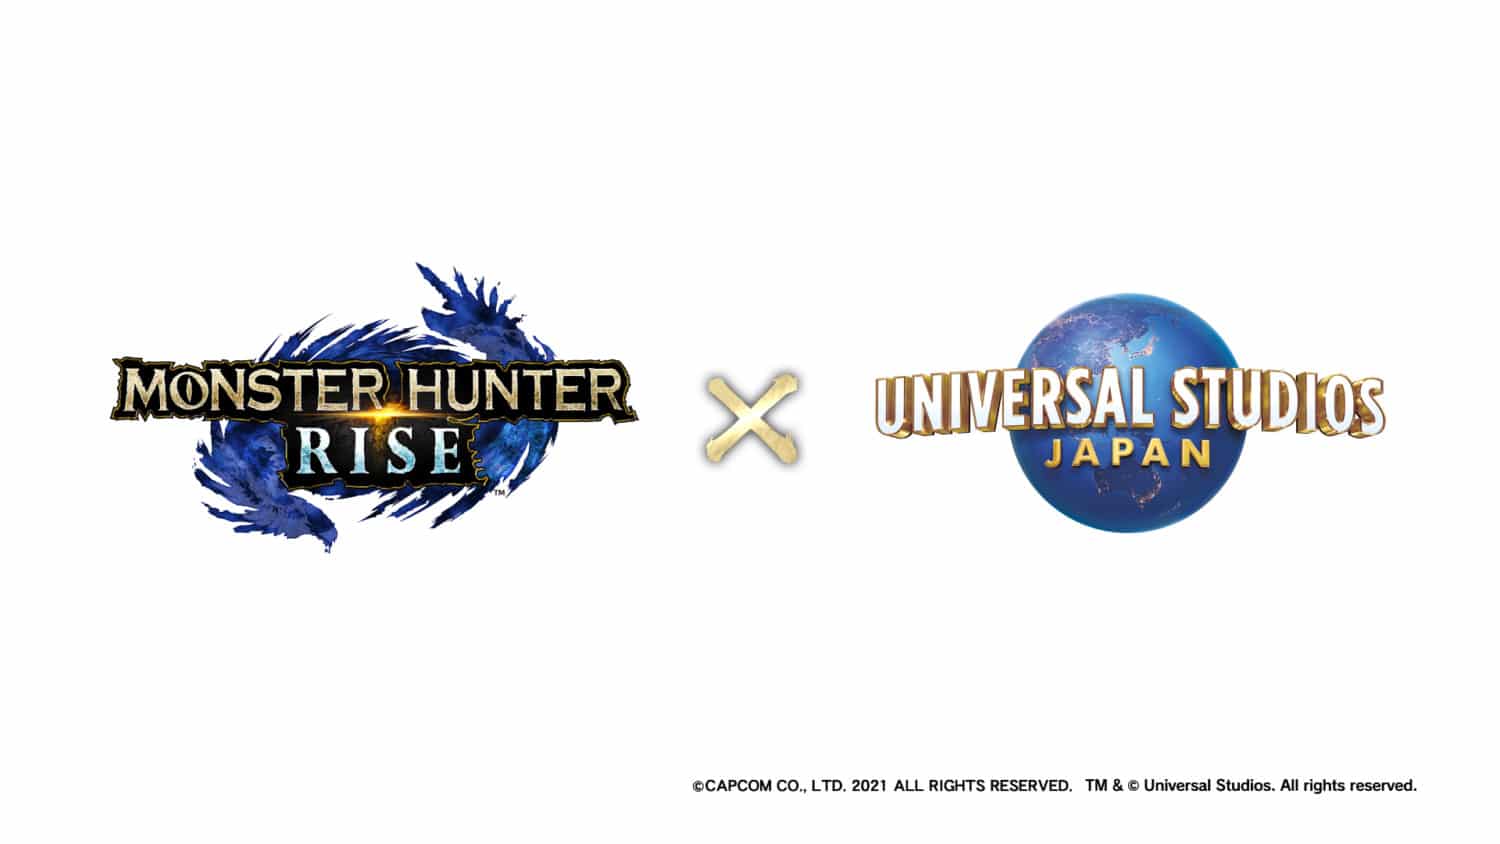 Monster Hunter Rise X Universal Studios Japan collab announced